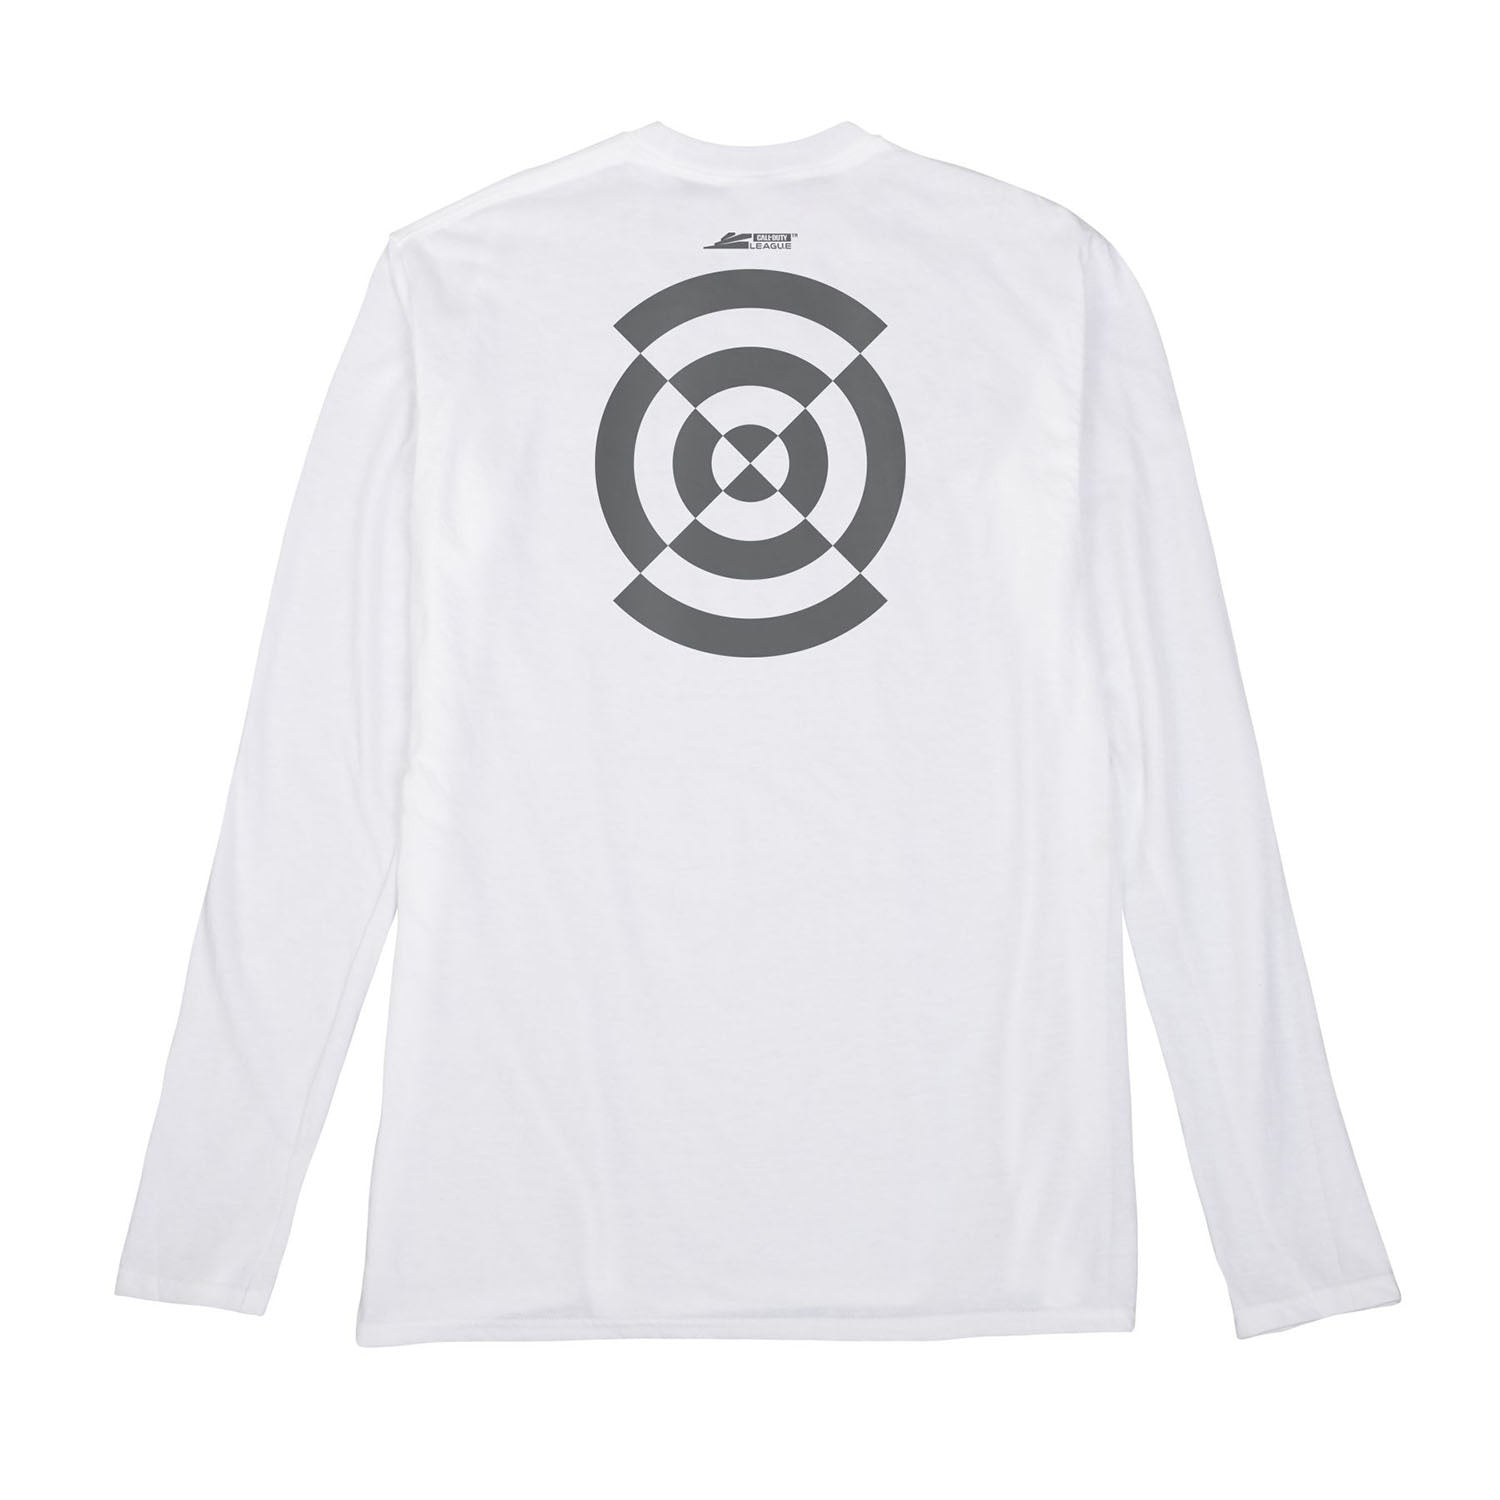 New York Subliners White Singular Logo Long Sleeve T-Shirt - Back View